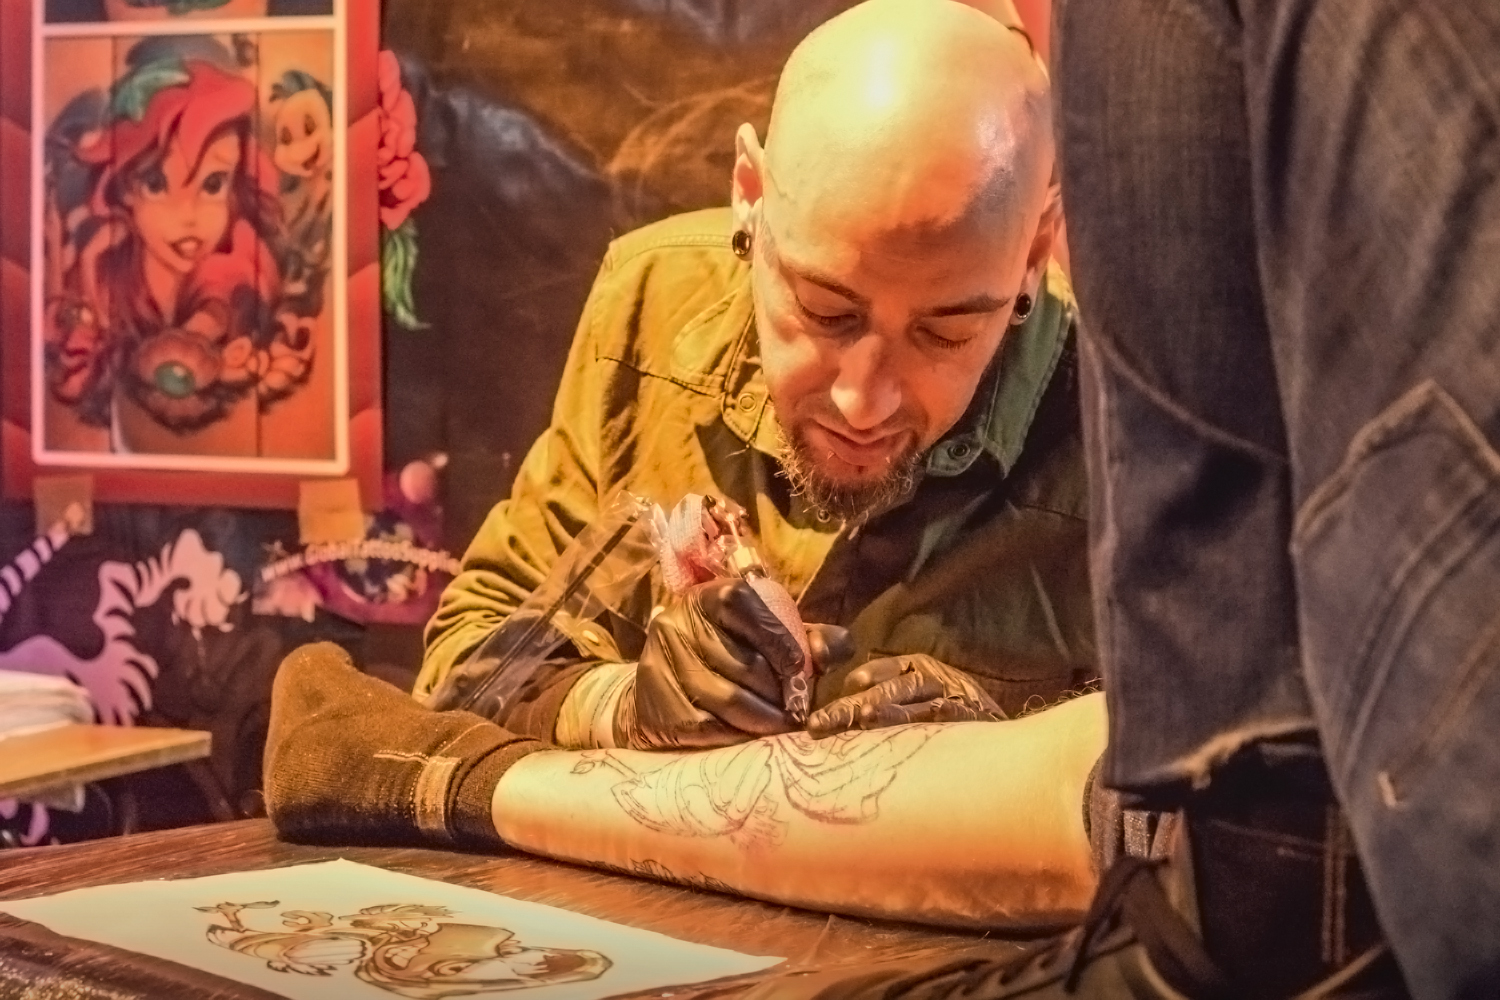 Tattoo Convention Rotterdam